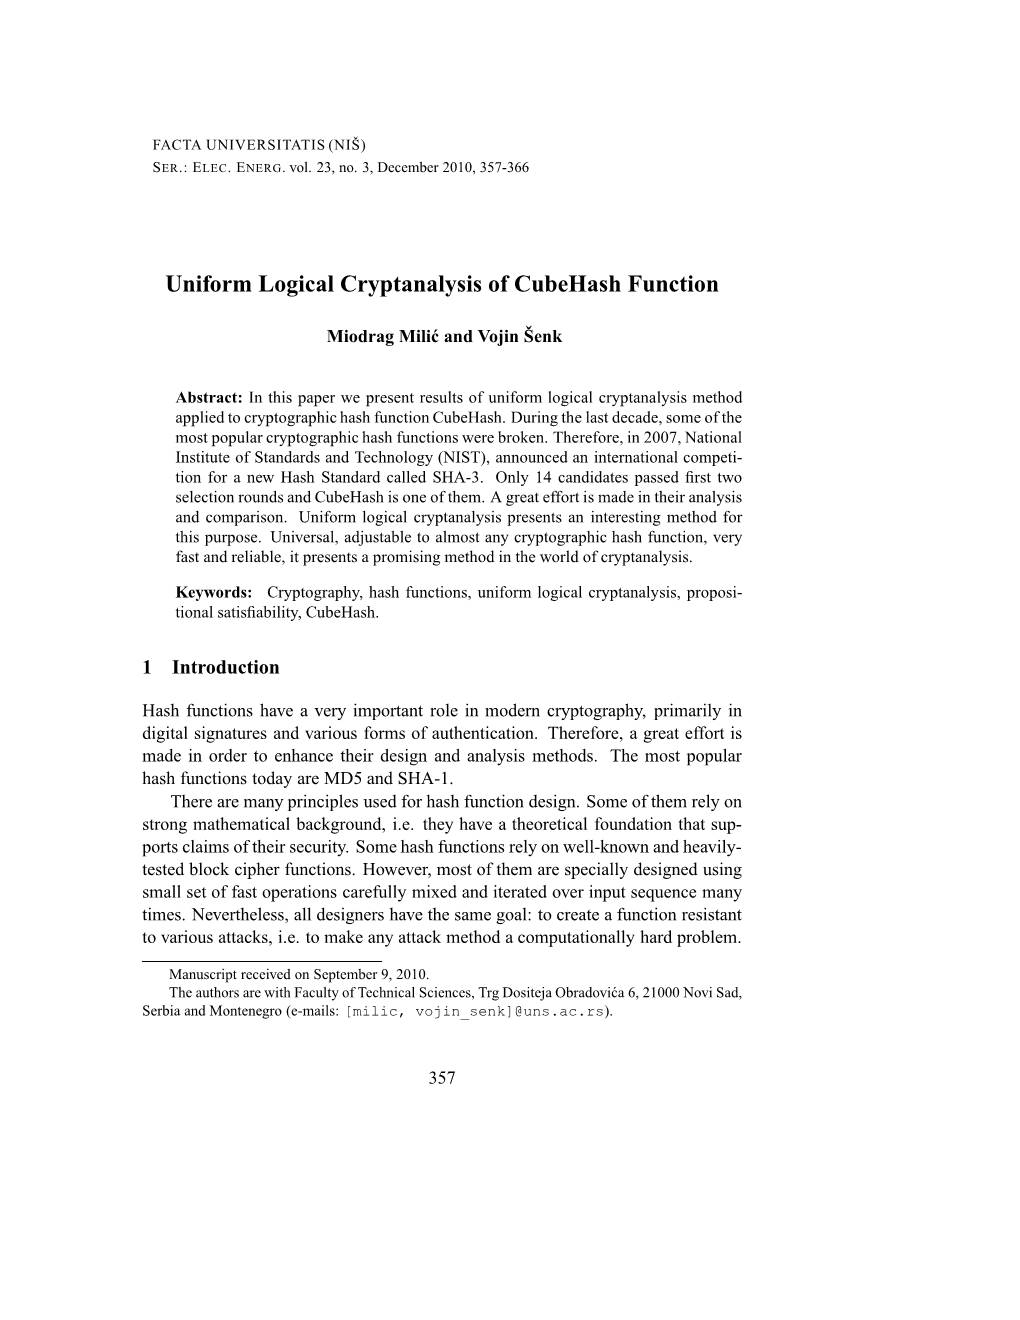 Uniform Logical Cryptanalysis of Cubehash Function